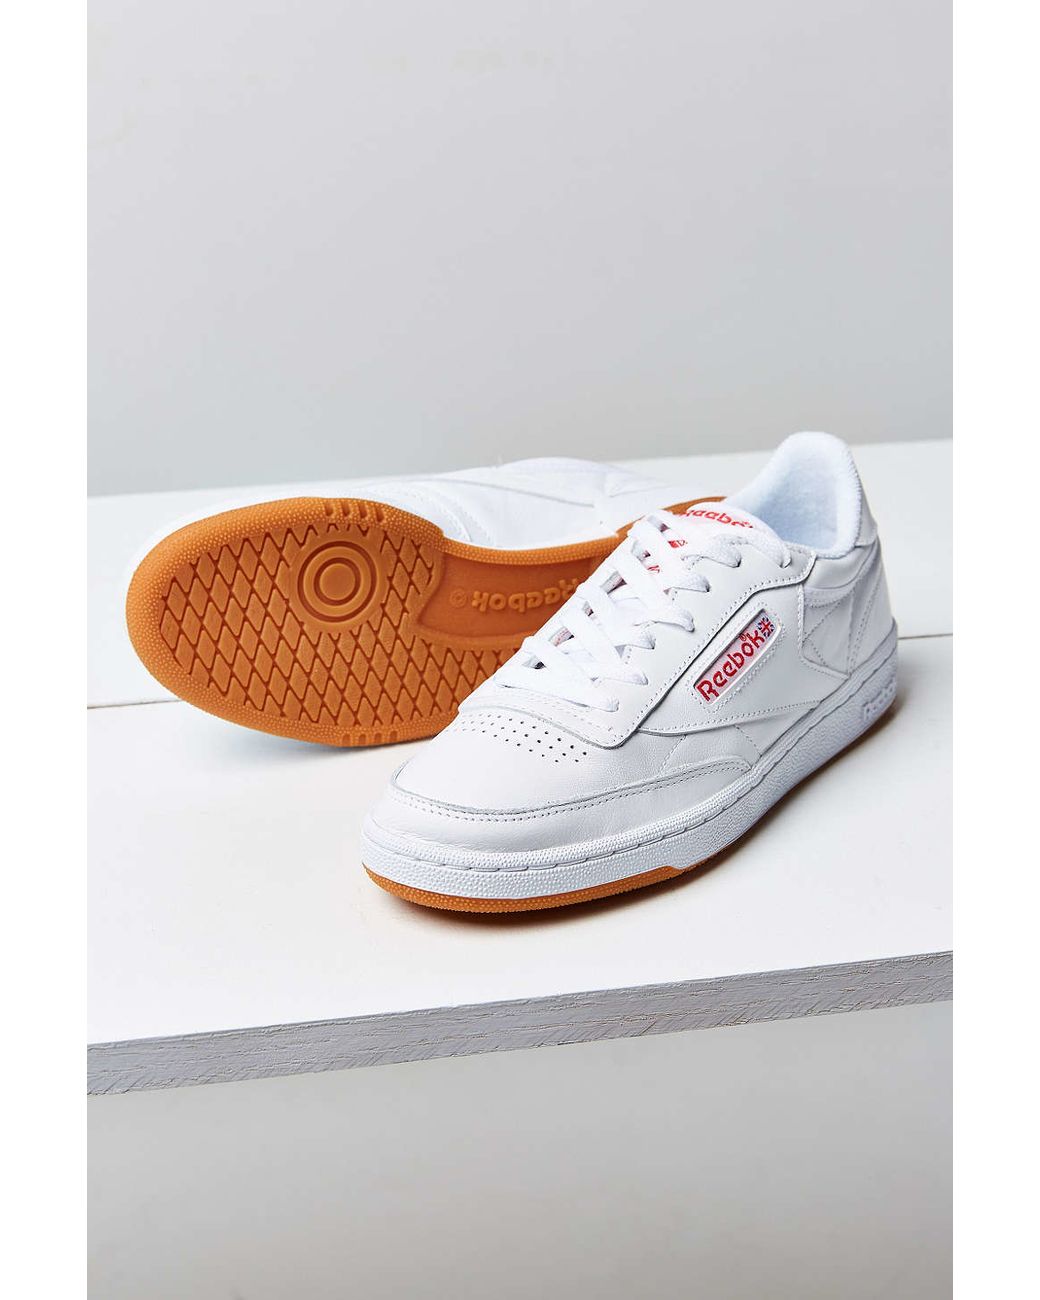 Reebok Leather Club C 85 Gum Sole Sneaker in White | Lyst